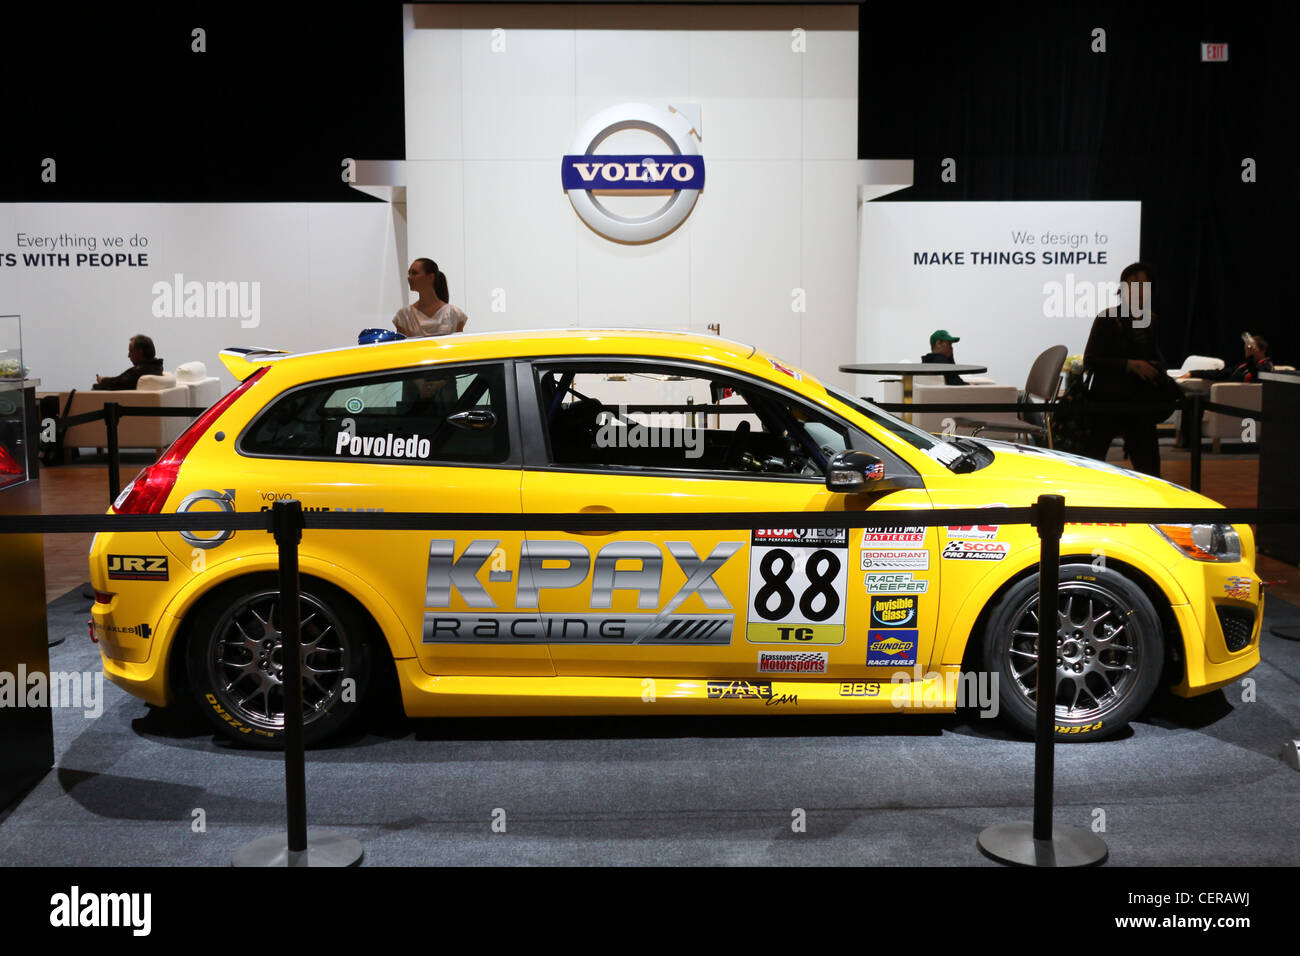 K-Pax Racing car Volvo C30 yellow Stock Photo